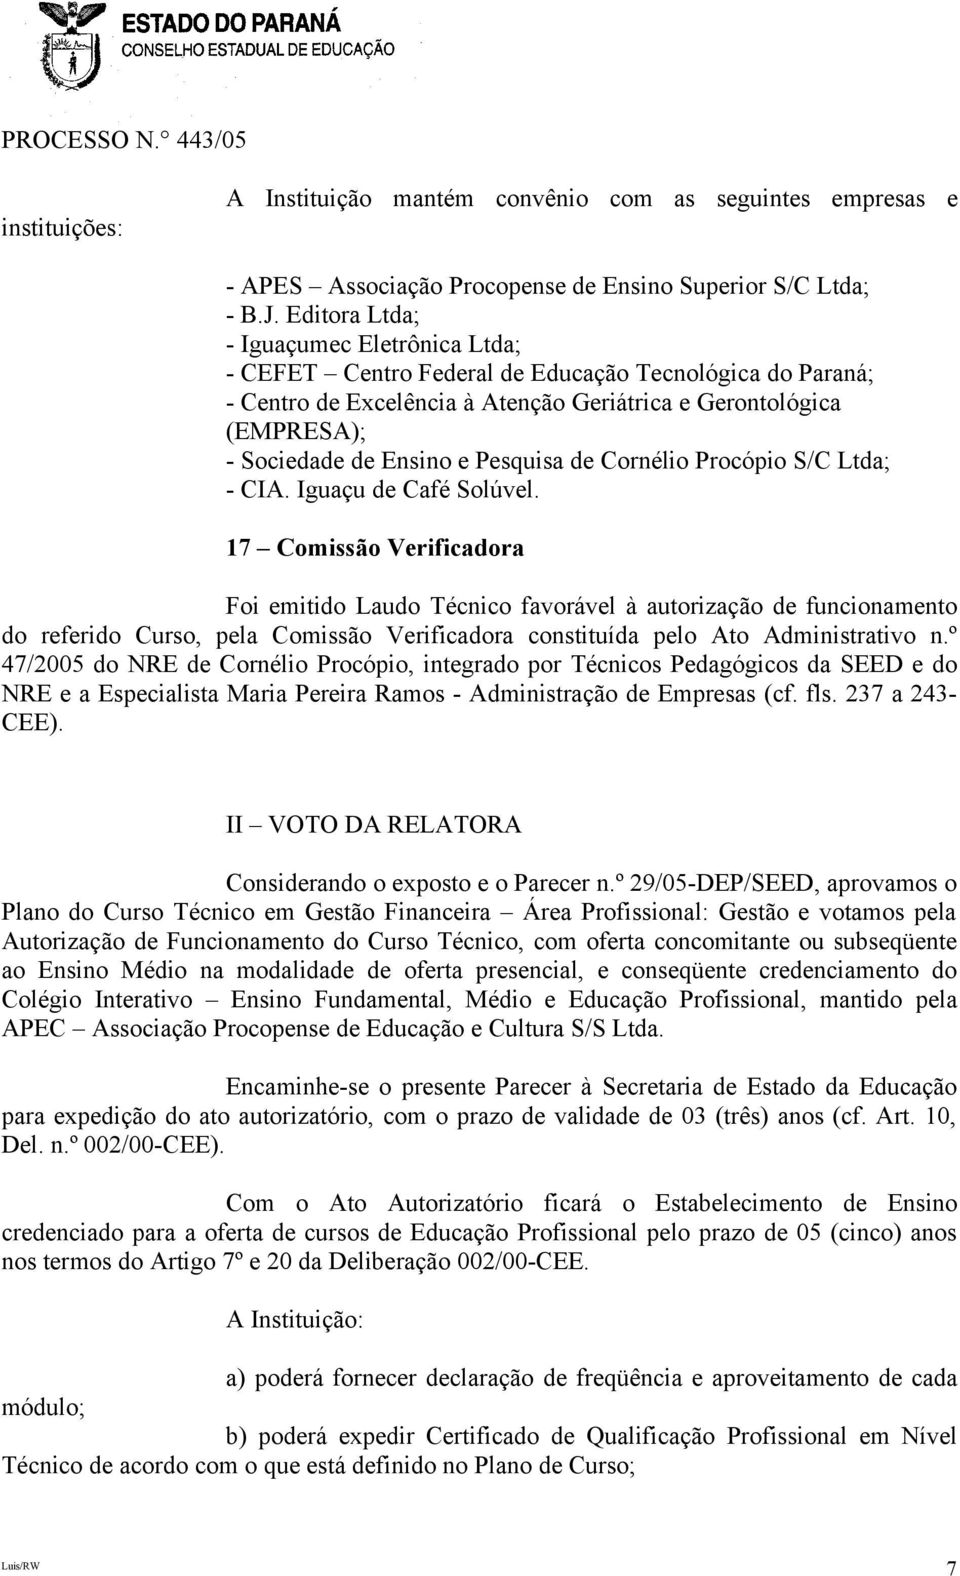 Pesquisa de Cornélio Procópio S/C Ltda; - CIA. Iguaçu de Café Solúvel.